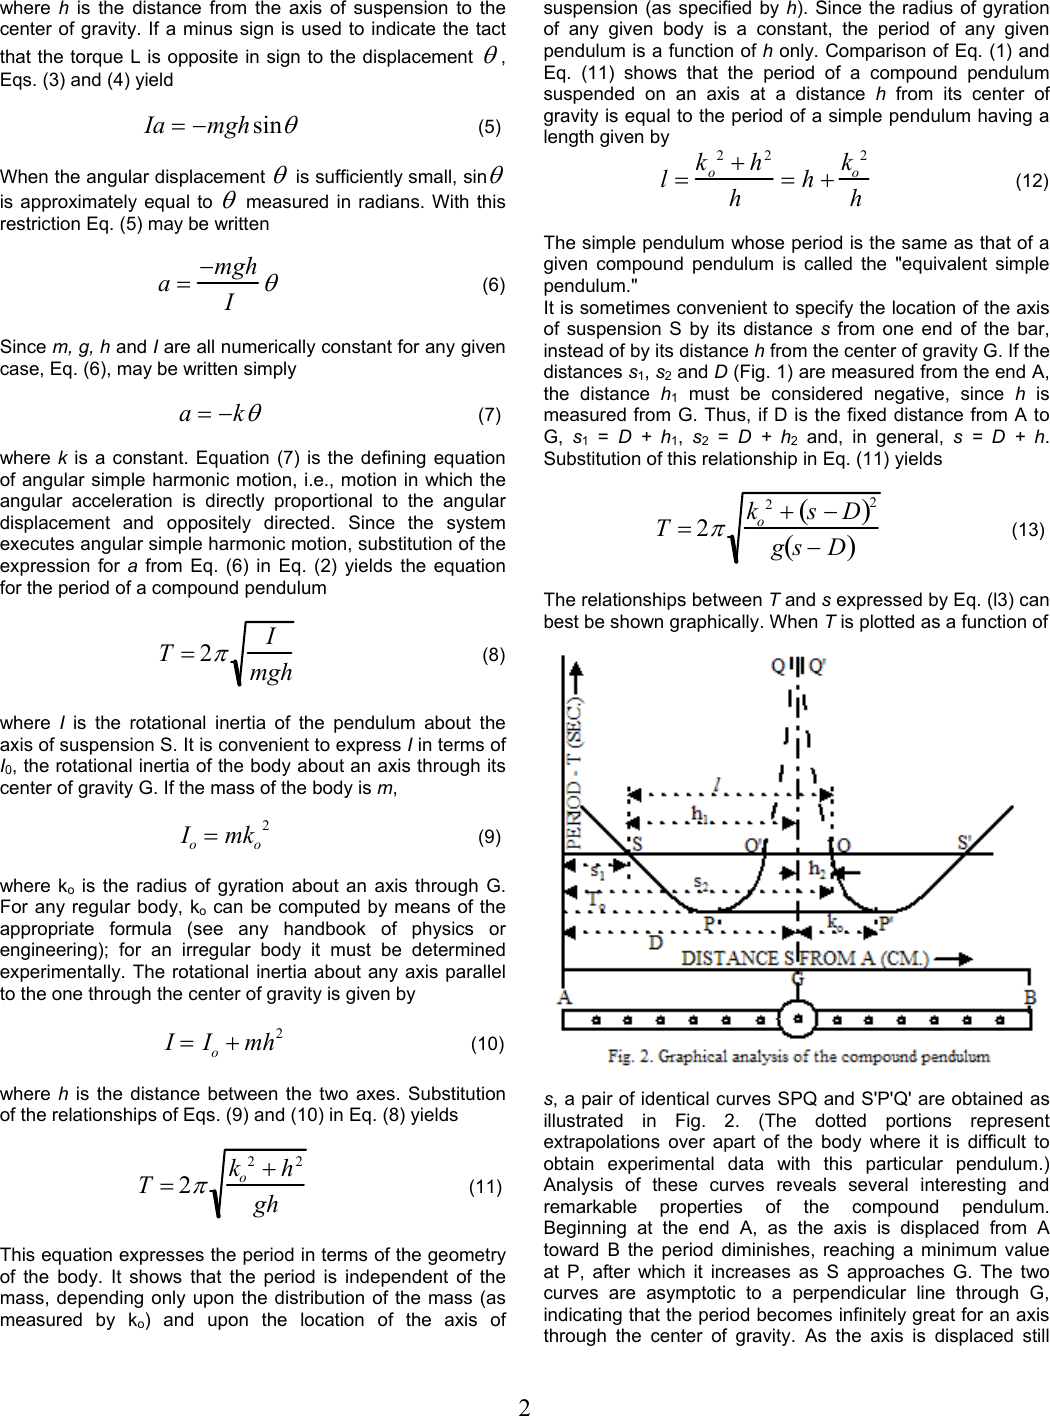 Page 2 of 4 - B 01 CENCO Compound Pendulum Manual